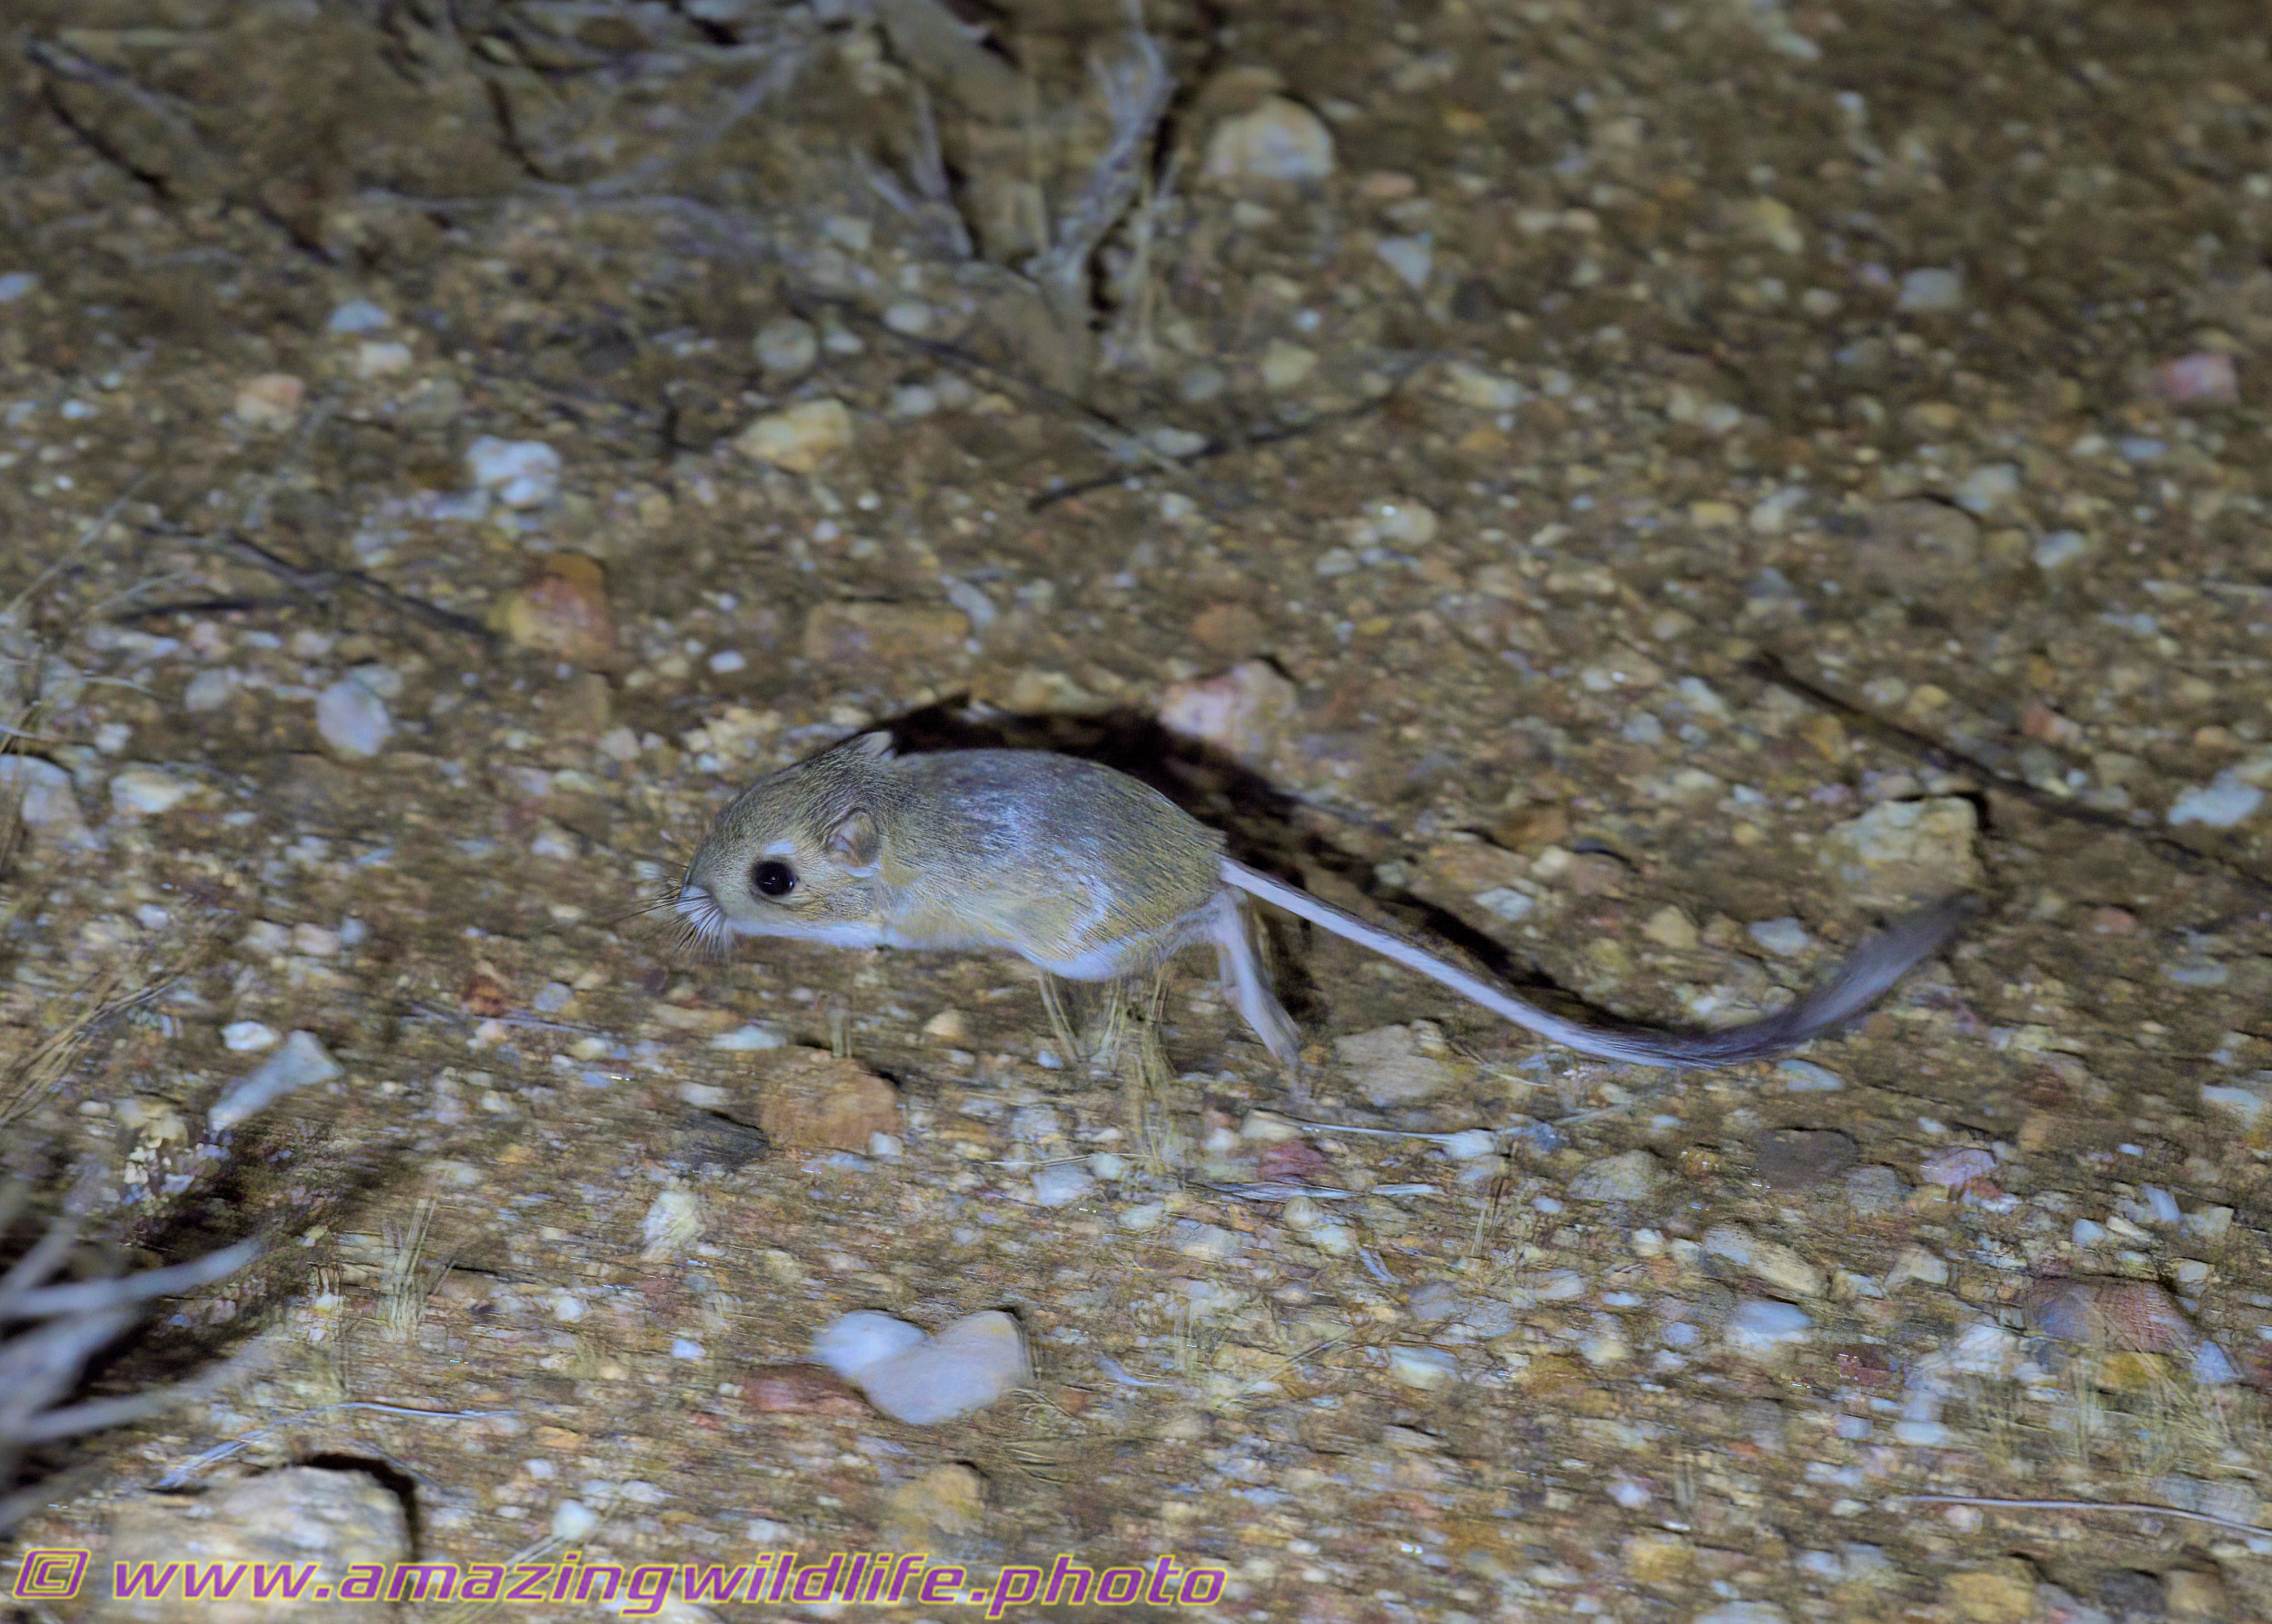 Desert trip with Rowshan – part 2 - Kangaroo mouse